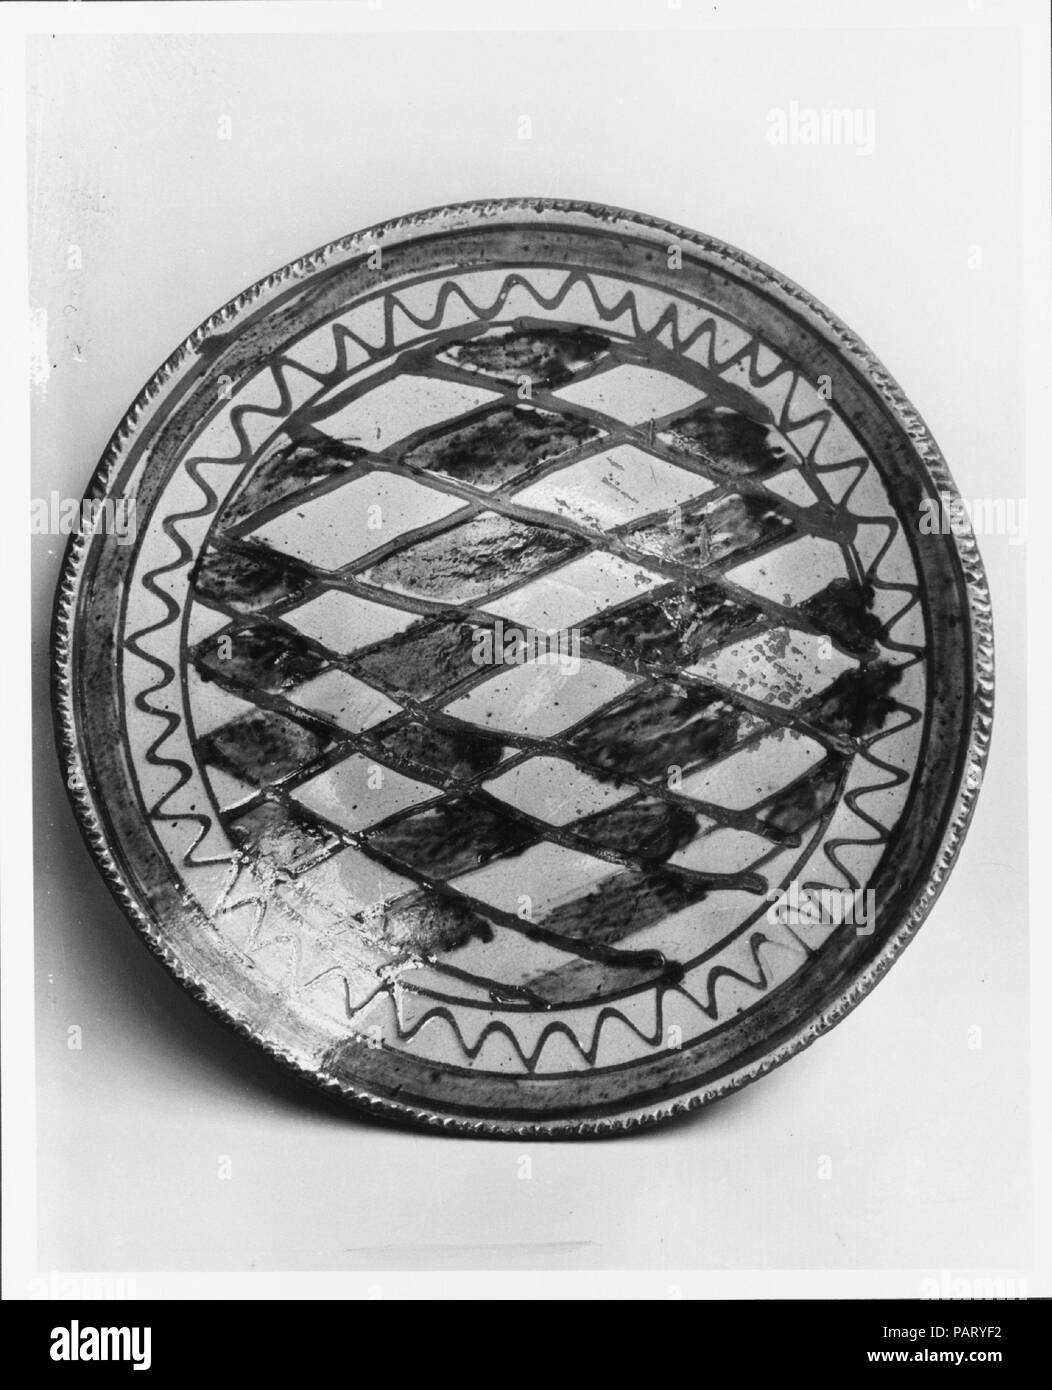 Plate. Culture: American. Dimensions: Diam. 10 1/2 in. (26.7 cm). Date: ca. 1840-60. Museum: Metropolitan Museum of Art, New York, USA. Stock Photo